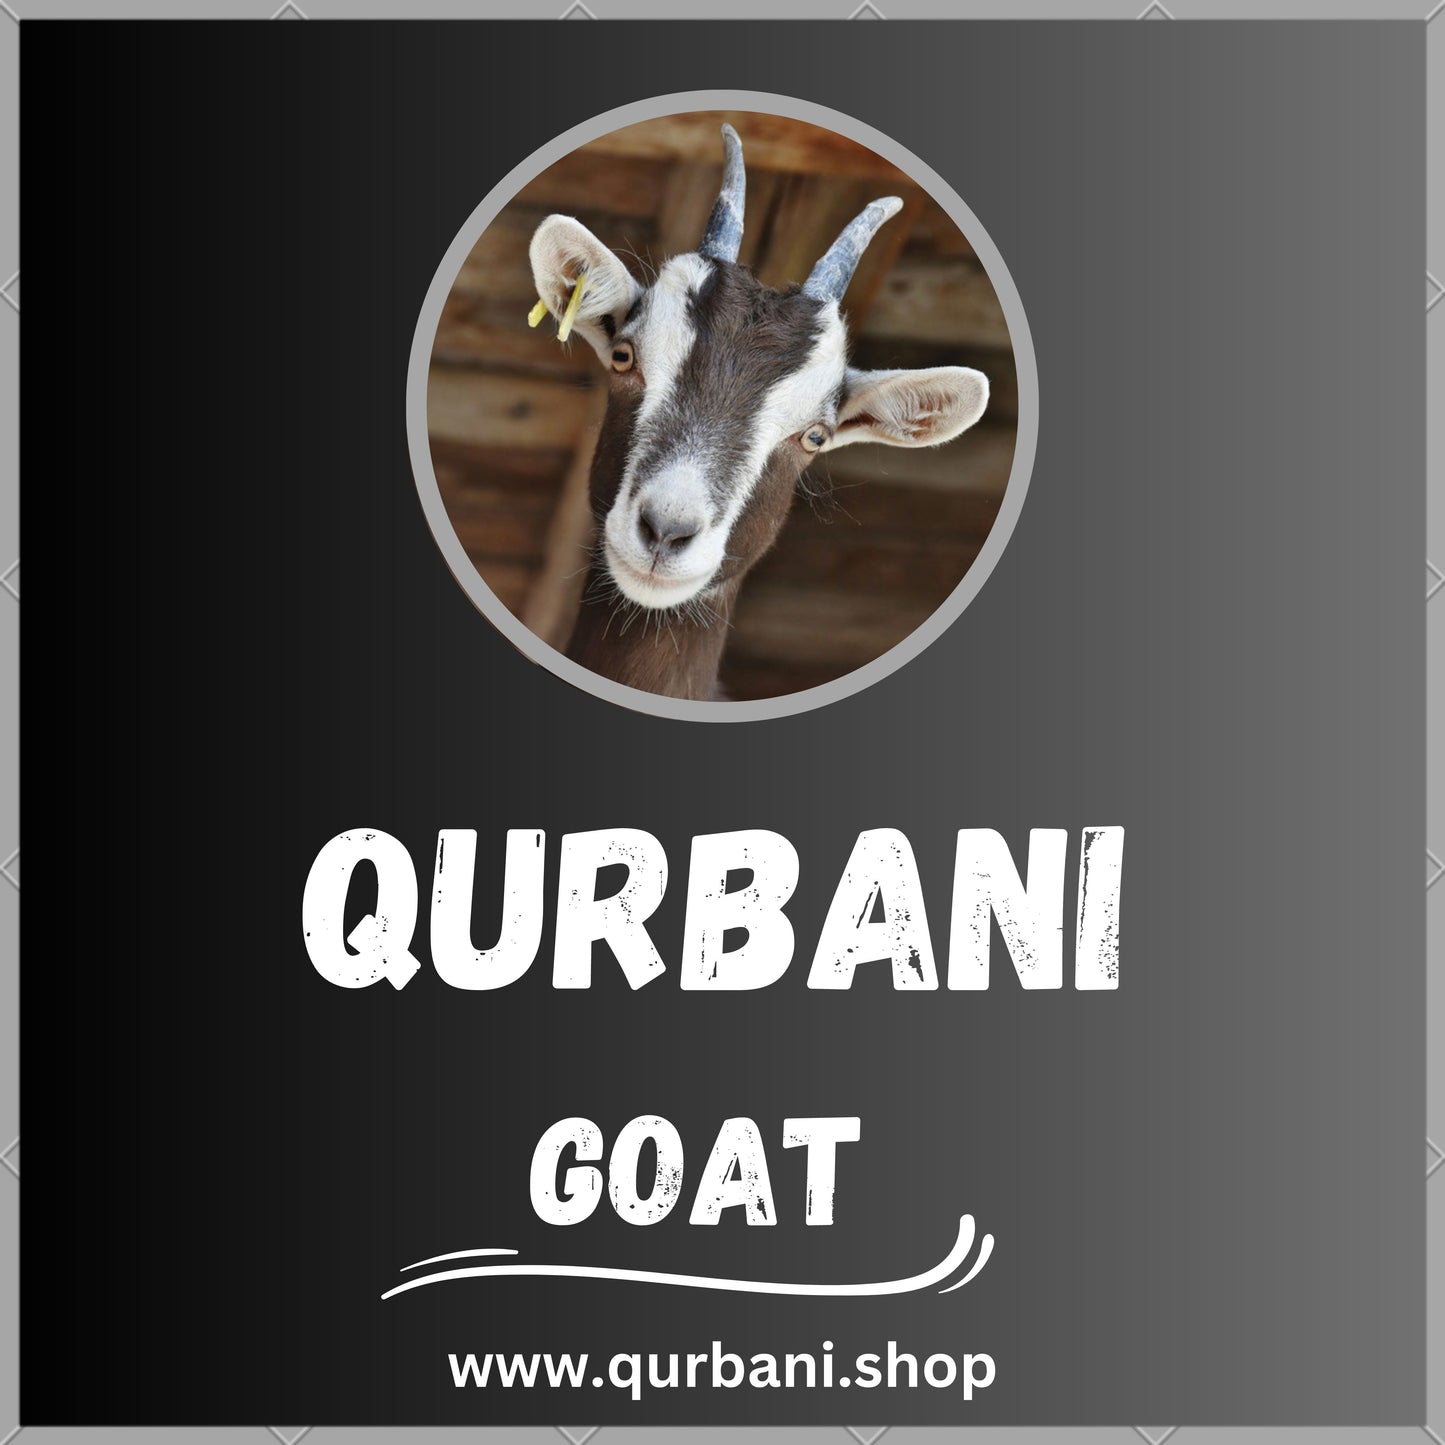 Top-Quality Qurbani Services in Garland - Celebrate Eid al-Adha